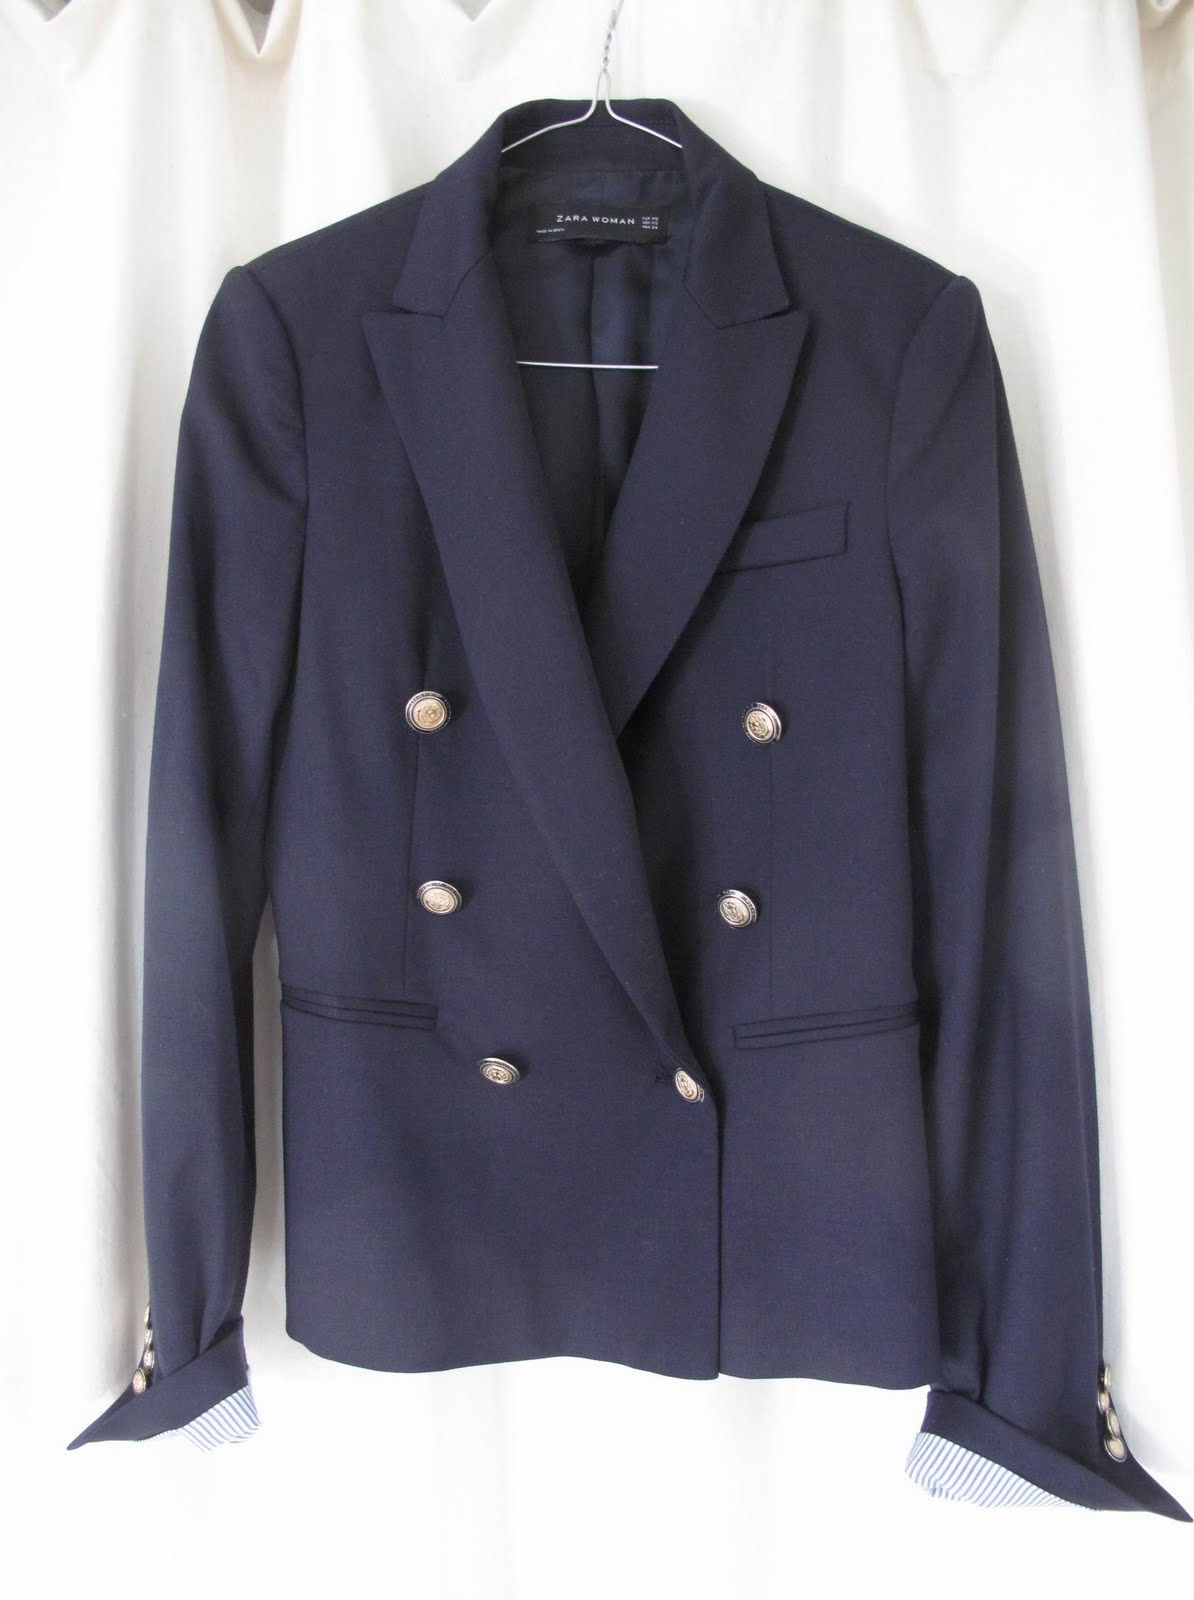 out of my closet: ZARA WOMAN navy blue blazer